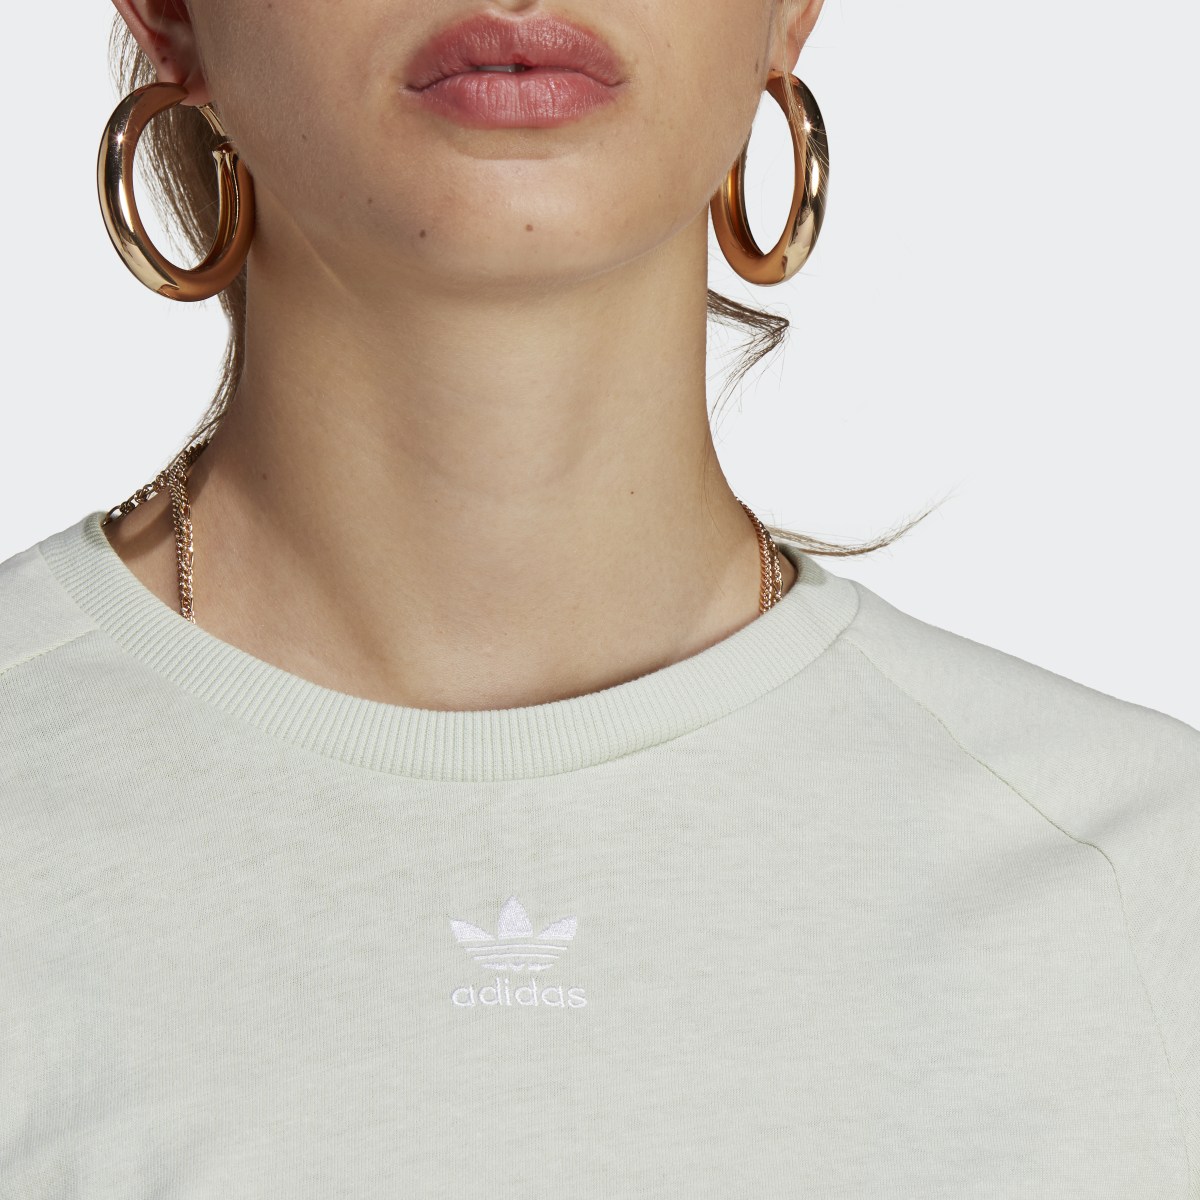 Adidas T-shirt Made with Hemp Essentials+. 6